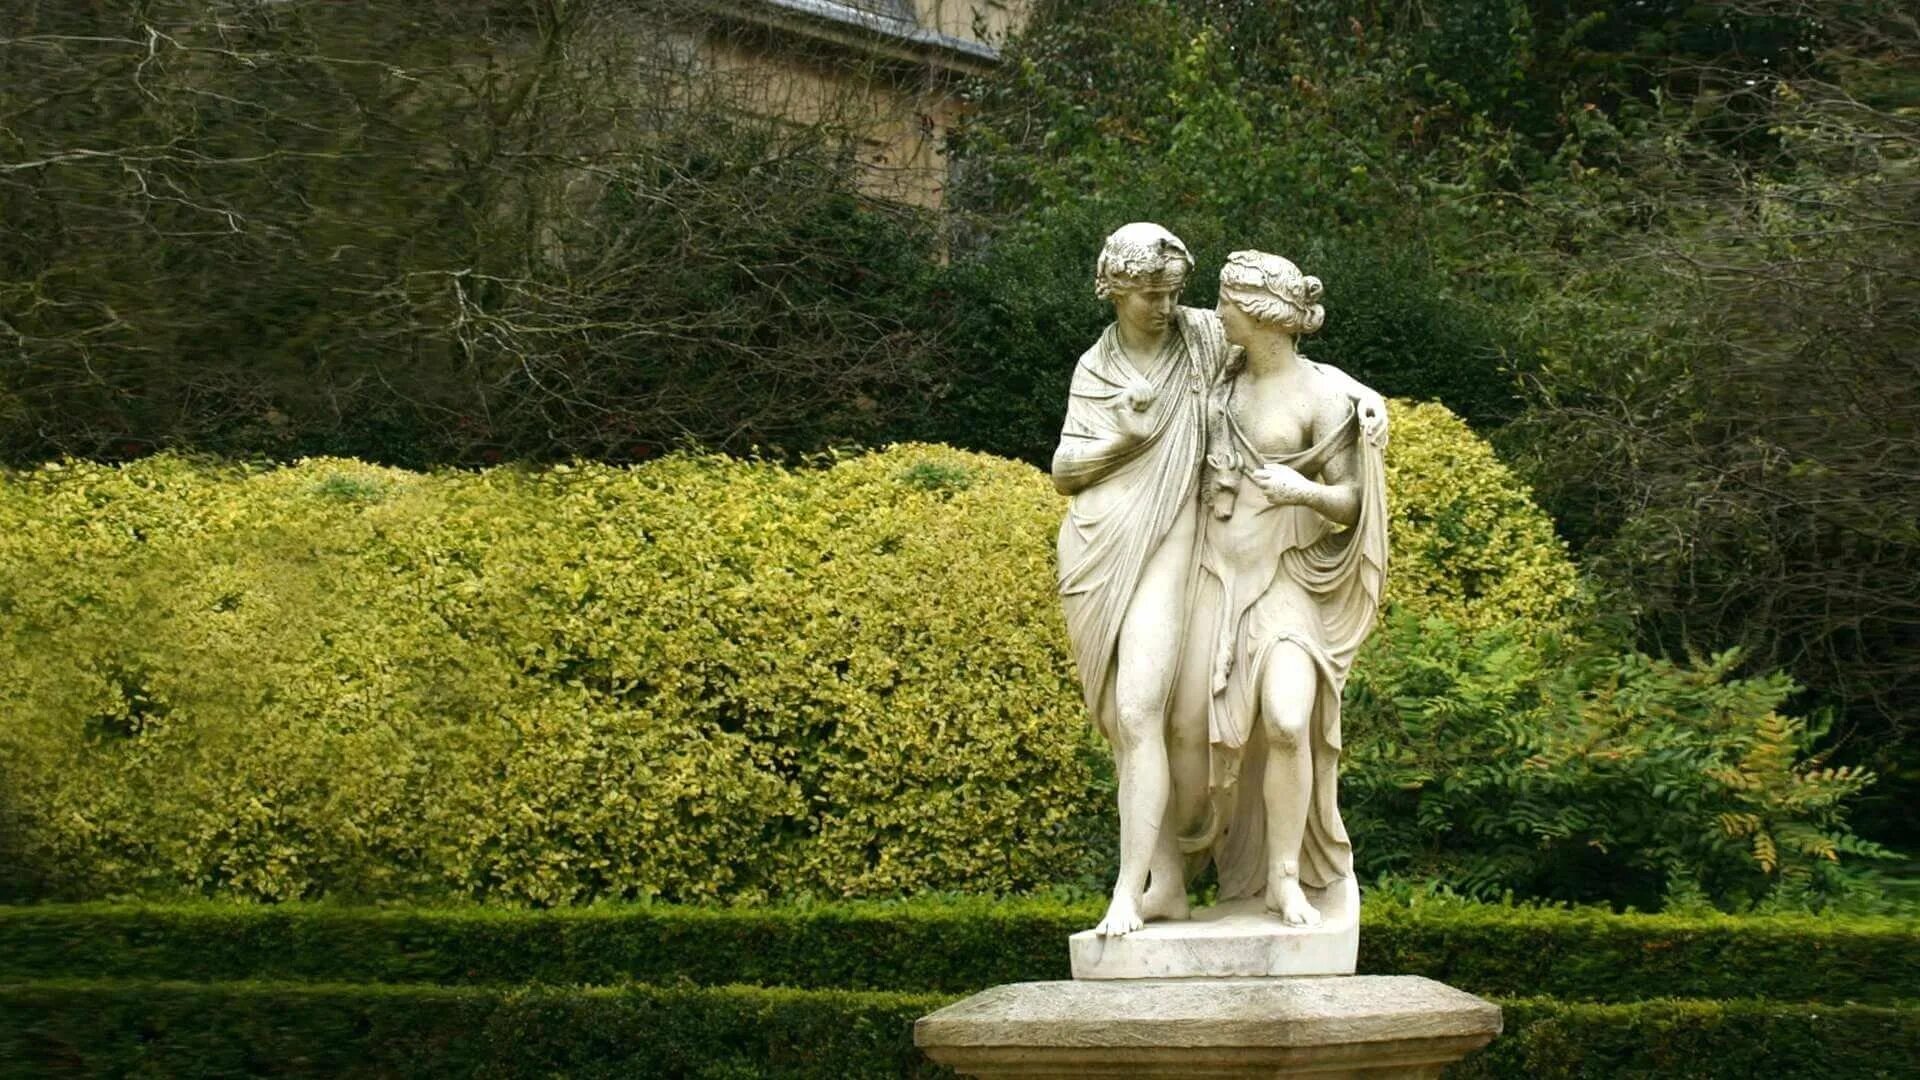 Со статуей. Скульптуры для сада. Современная Парковая скульптура. Статуи для сада. Шедевры скульптуры.